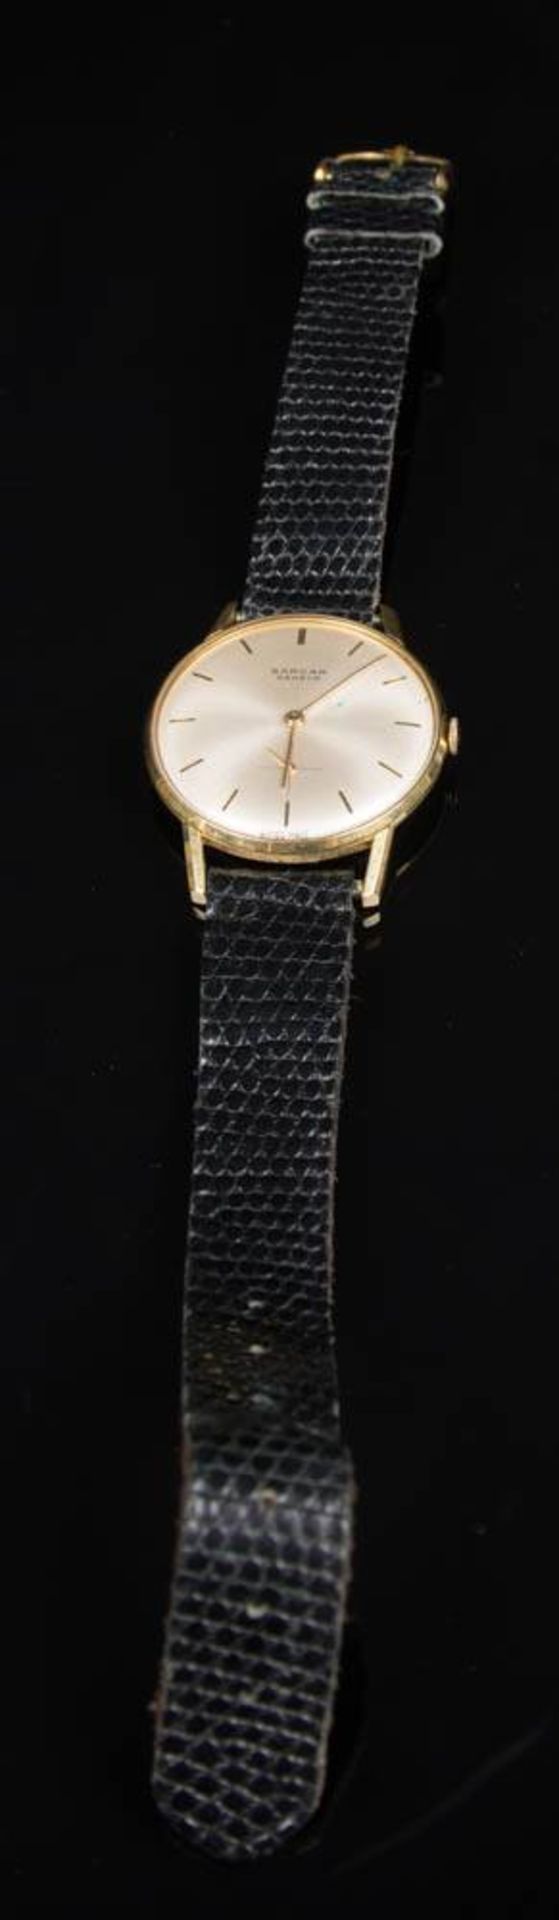 Sarcar-Geneve Armbanduhr, 1960er.